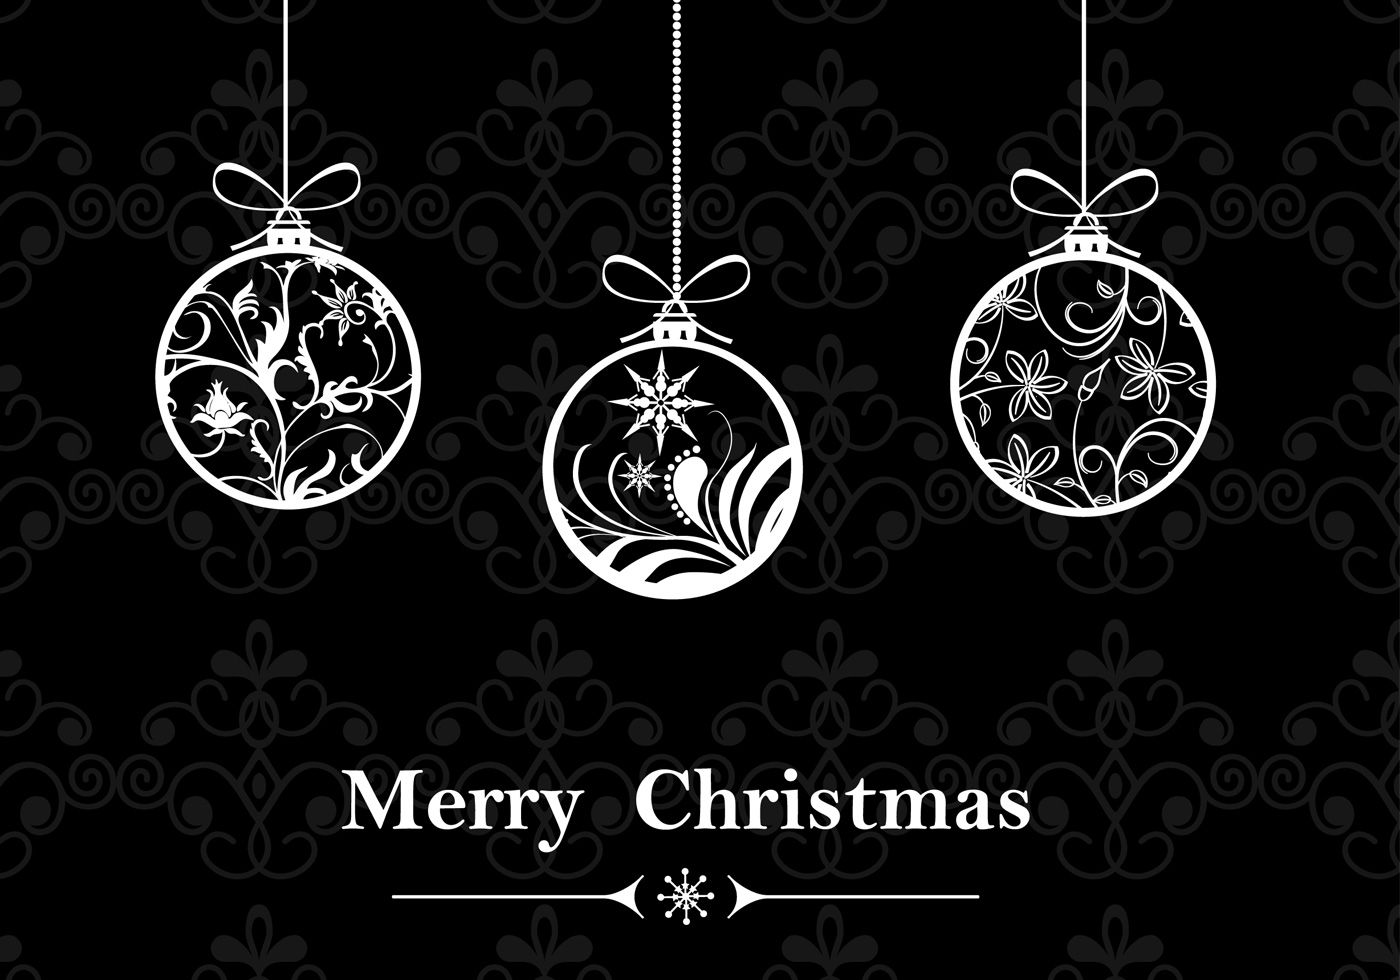 Black & White Christmas Ornament Wallpaper Vector Free Vectors, Clipart Graphics & Vector Art